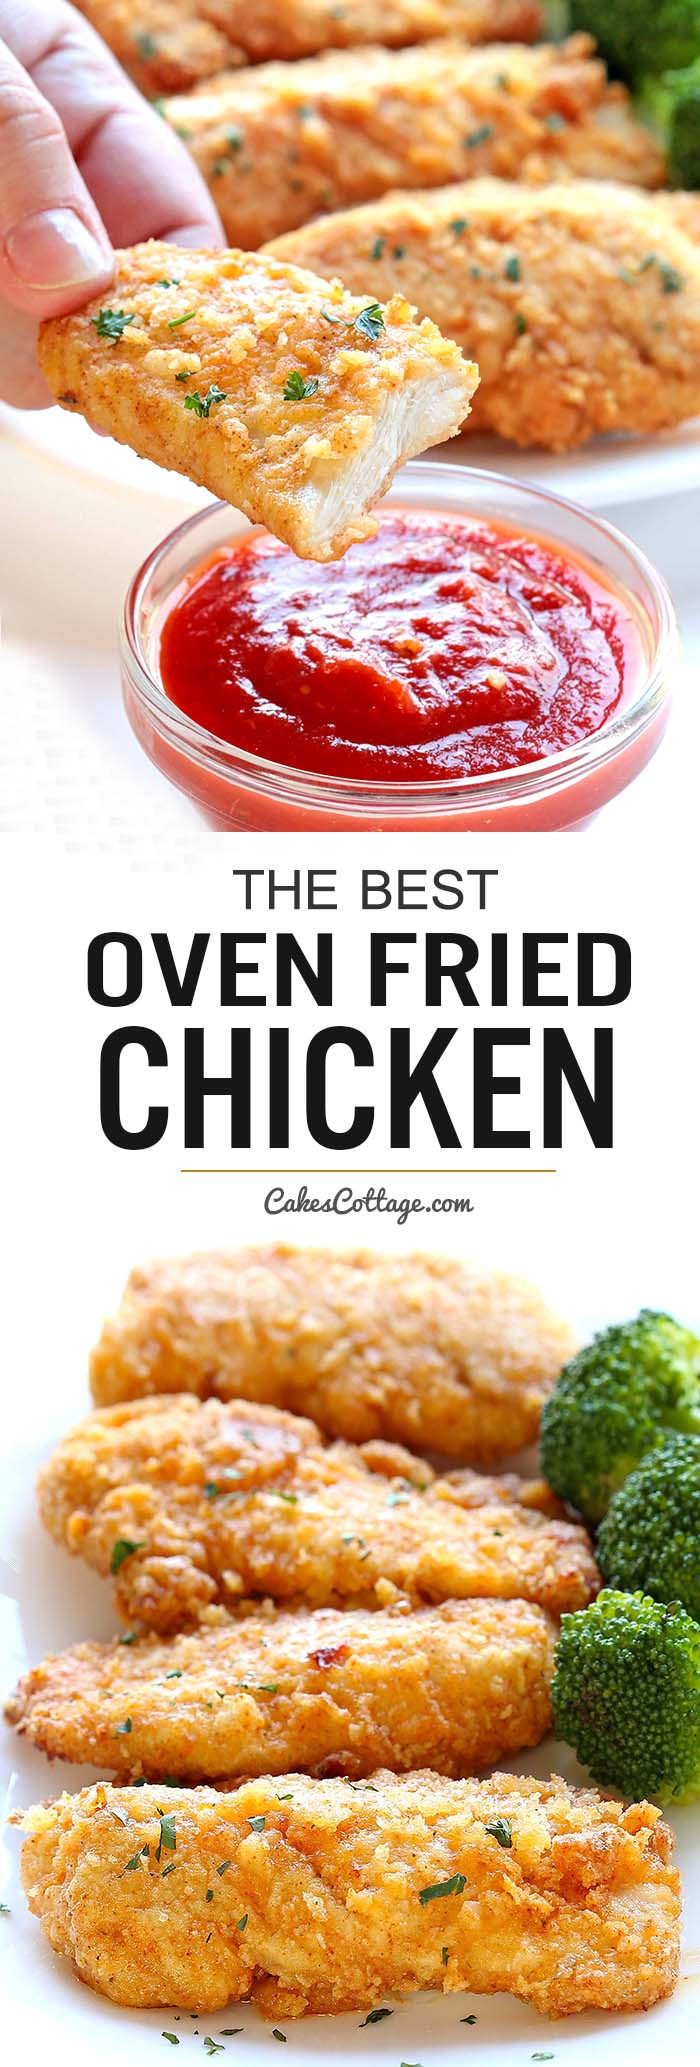 Best Oven Fried Chicken
 The Best Oven Fried Chicken Cakescottage